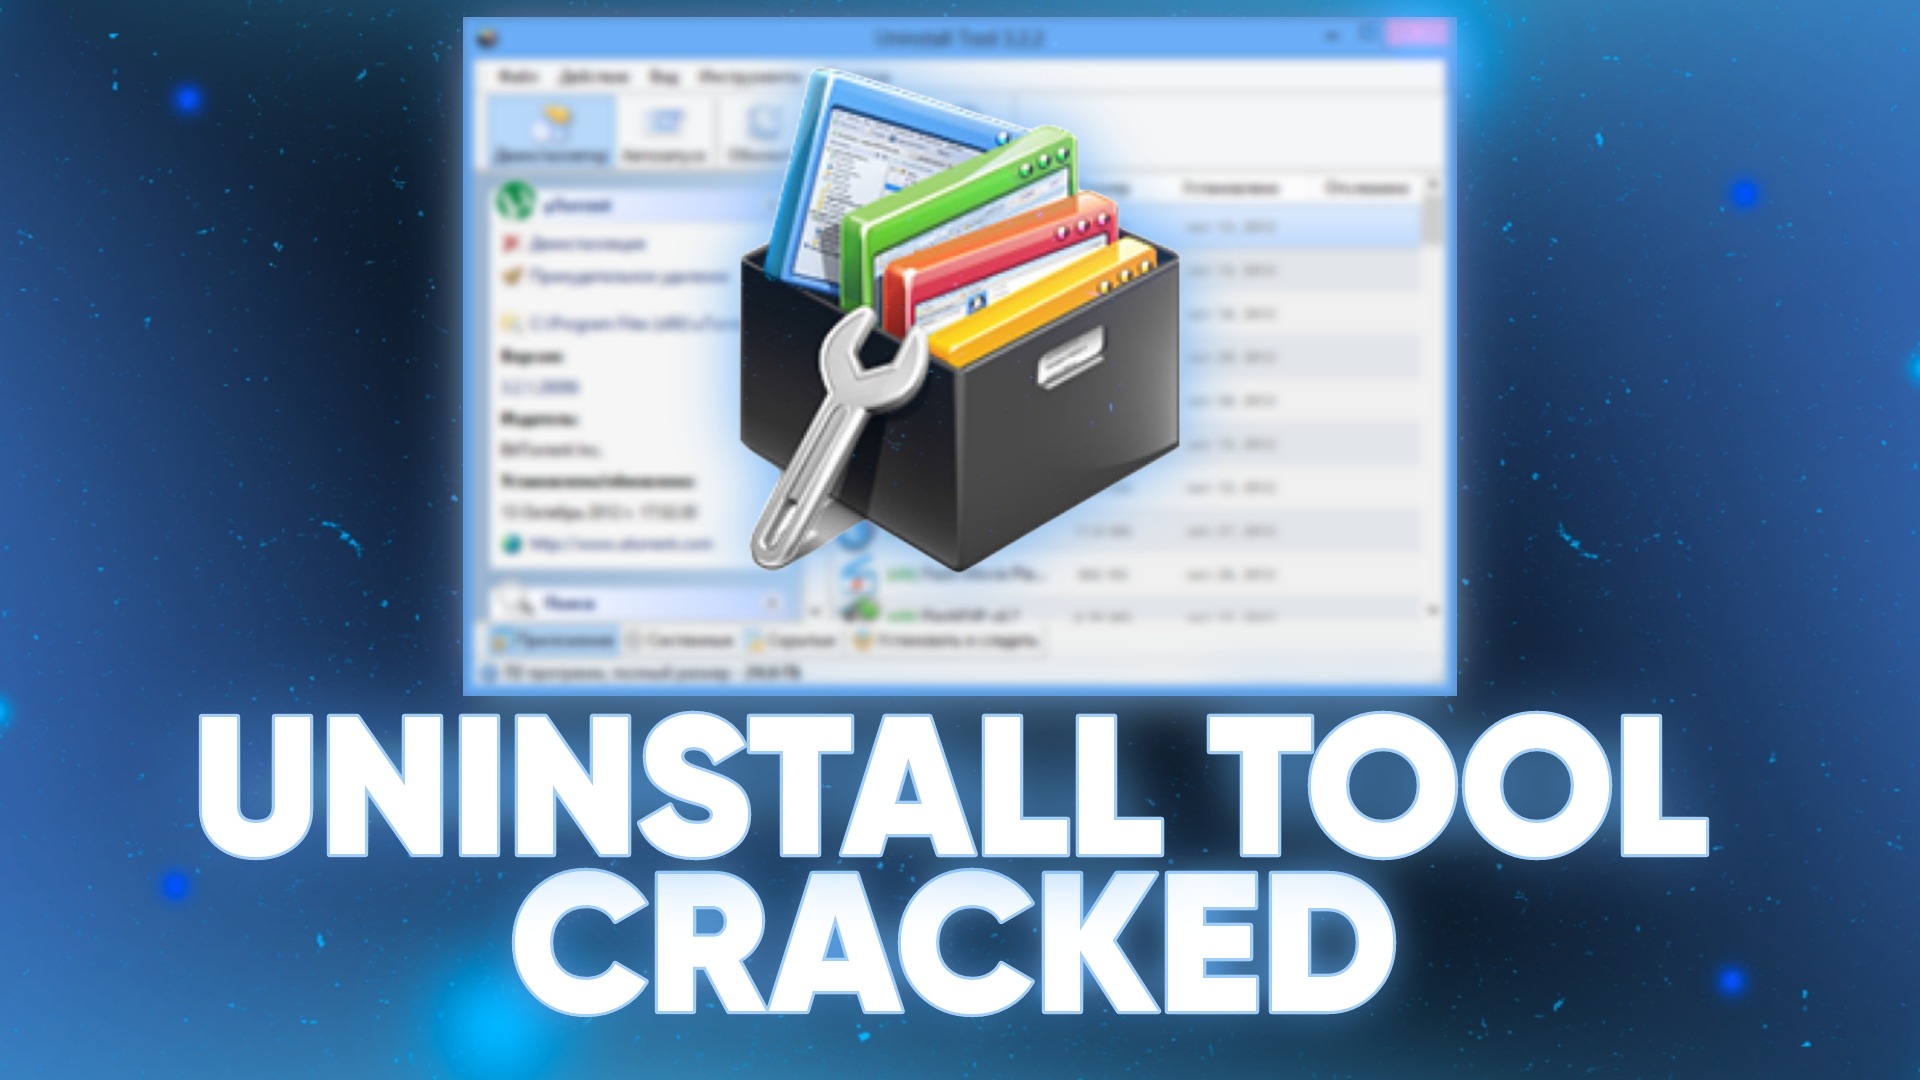 Uninstall tool крякнутый. Uninstall Tool crack. Unlock Tool крякнутый. Uninstall Tool для Windows 7 активированная. Ключ для Uninstall Tool 3.5.10.